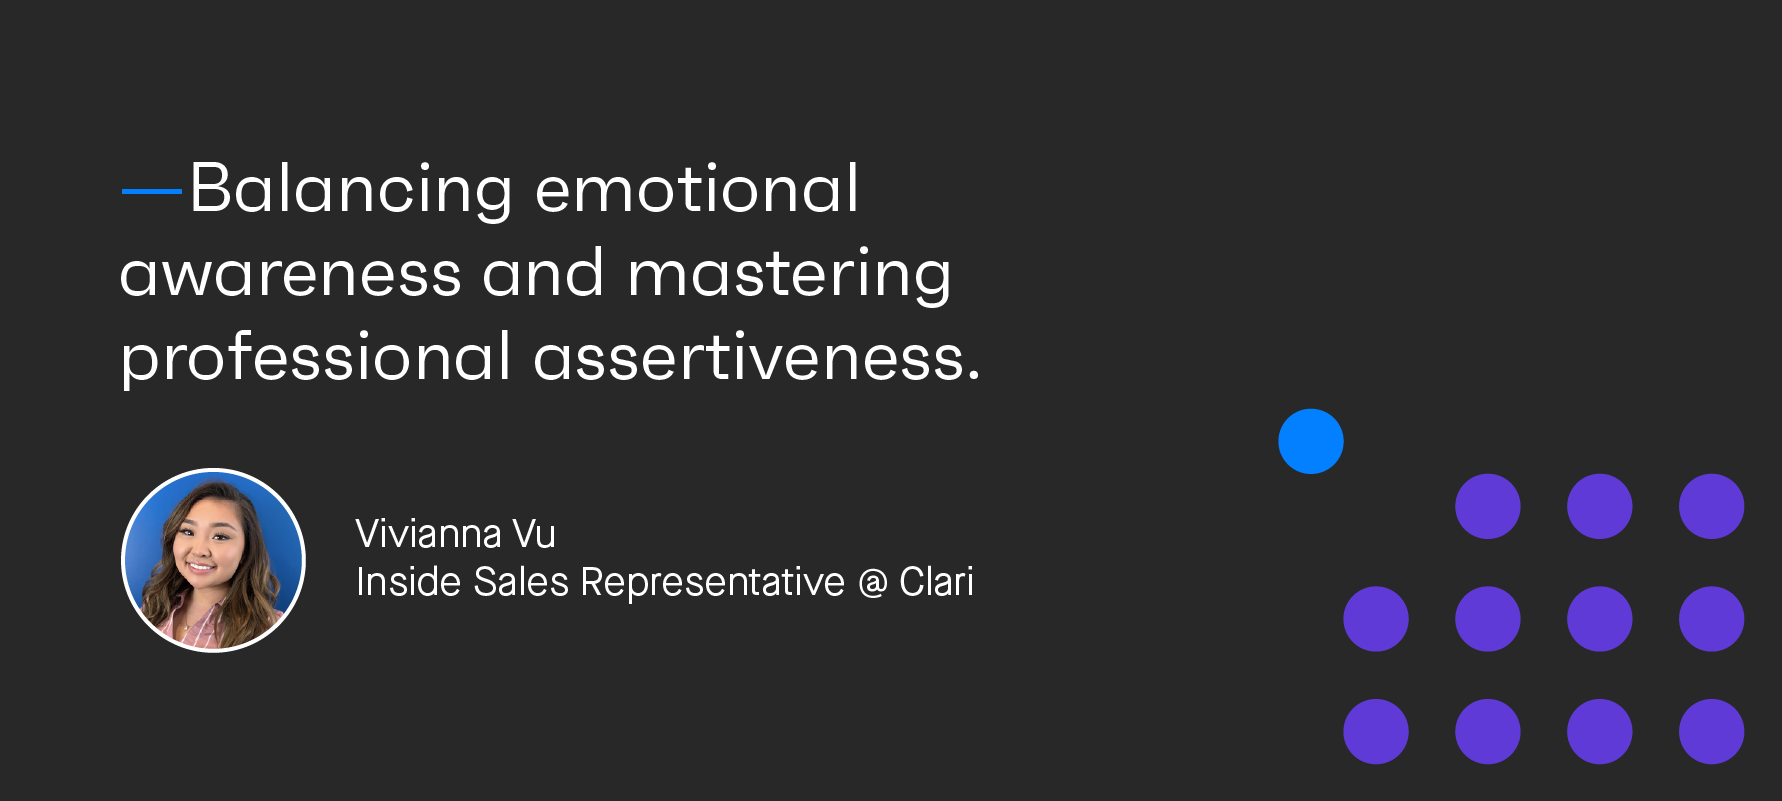 Banner image with headshot photograph of Vivianna Vu, Inside Sales Representative at Clari